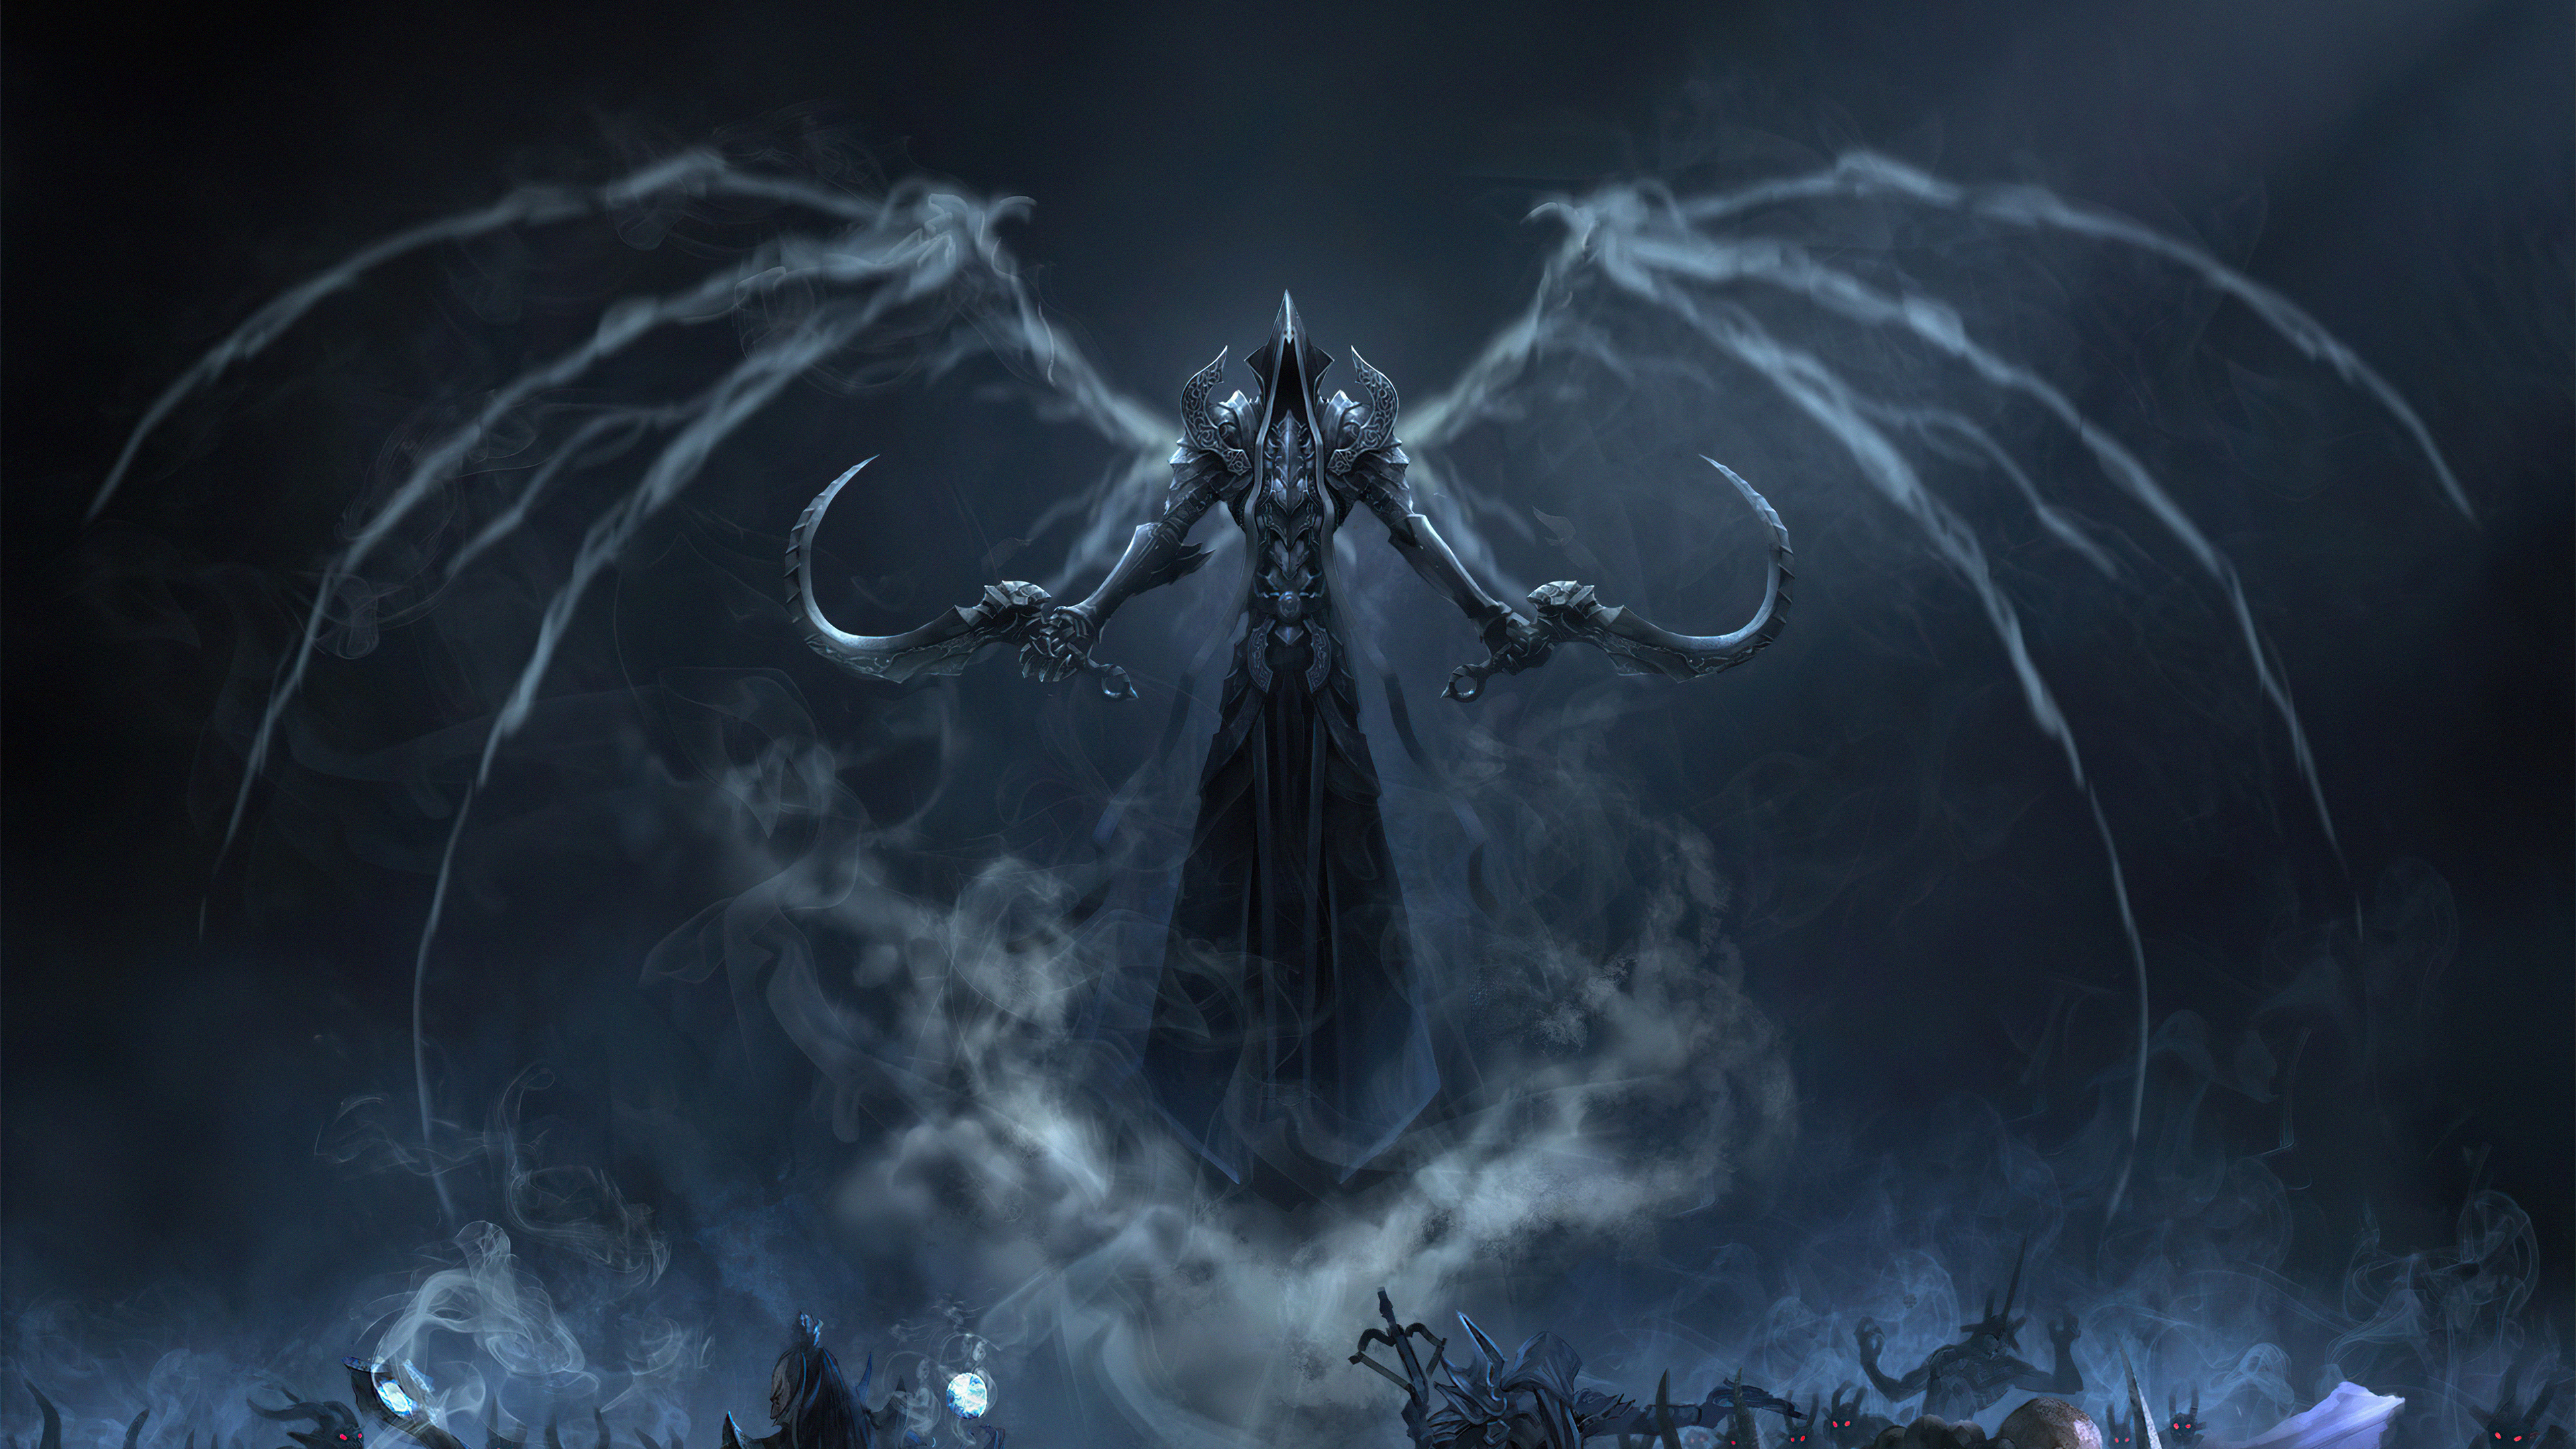 download diablo reaper of souls